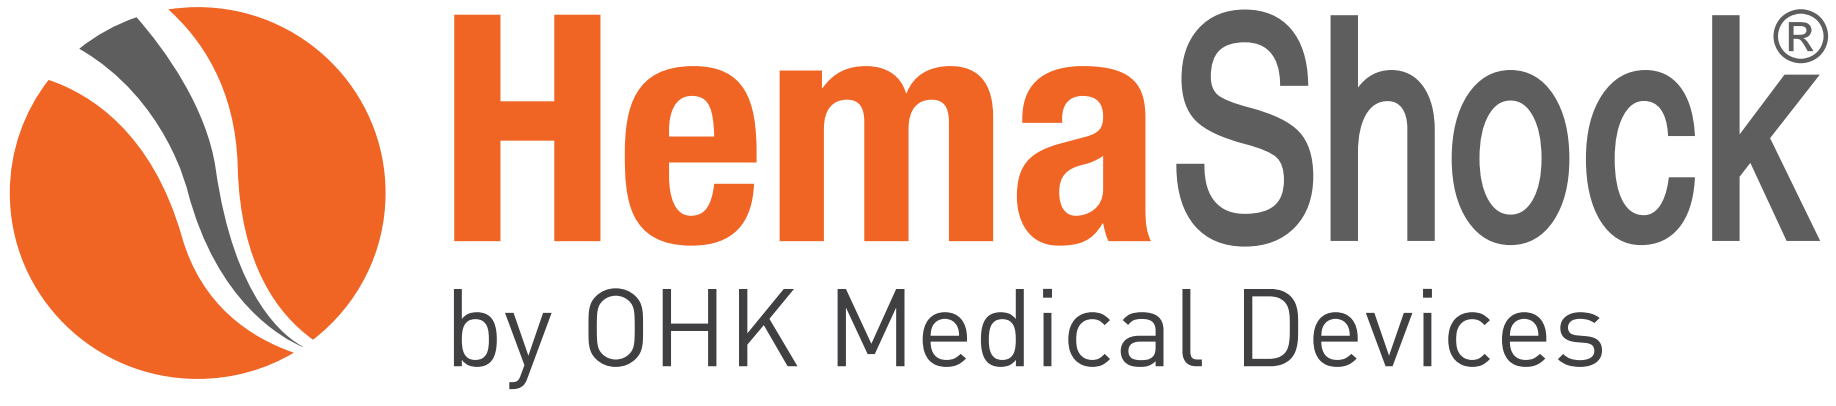 sponsor logo - HemaShock